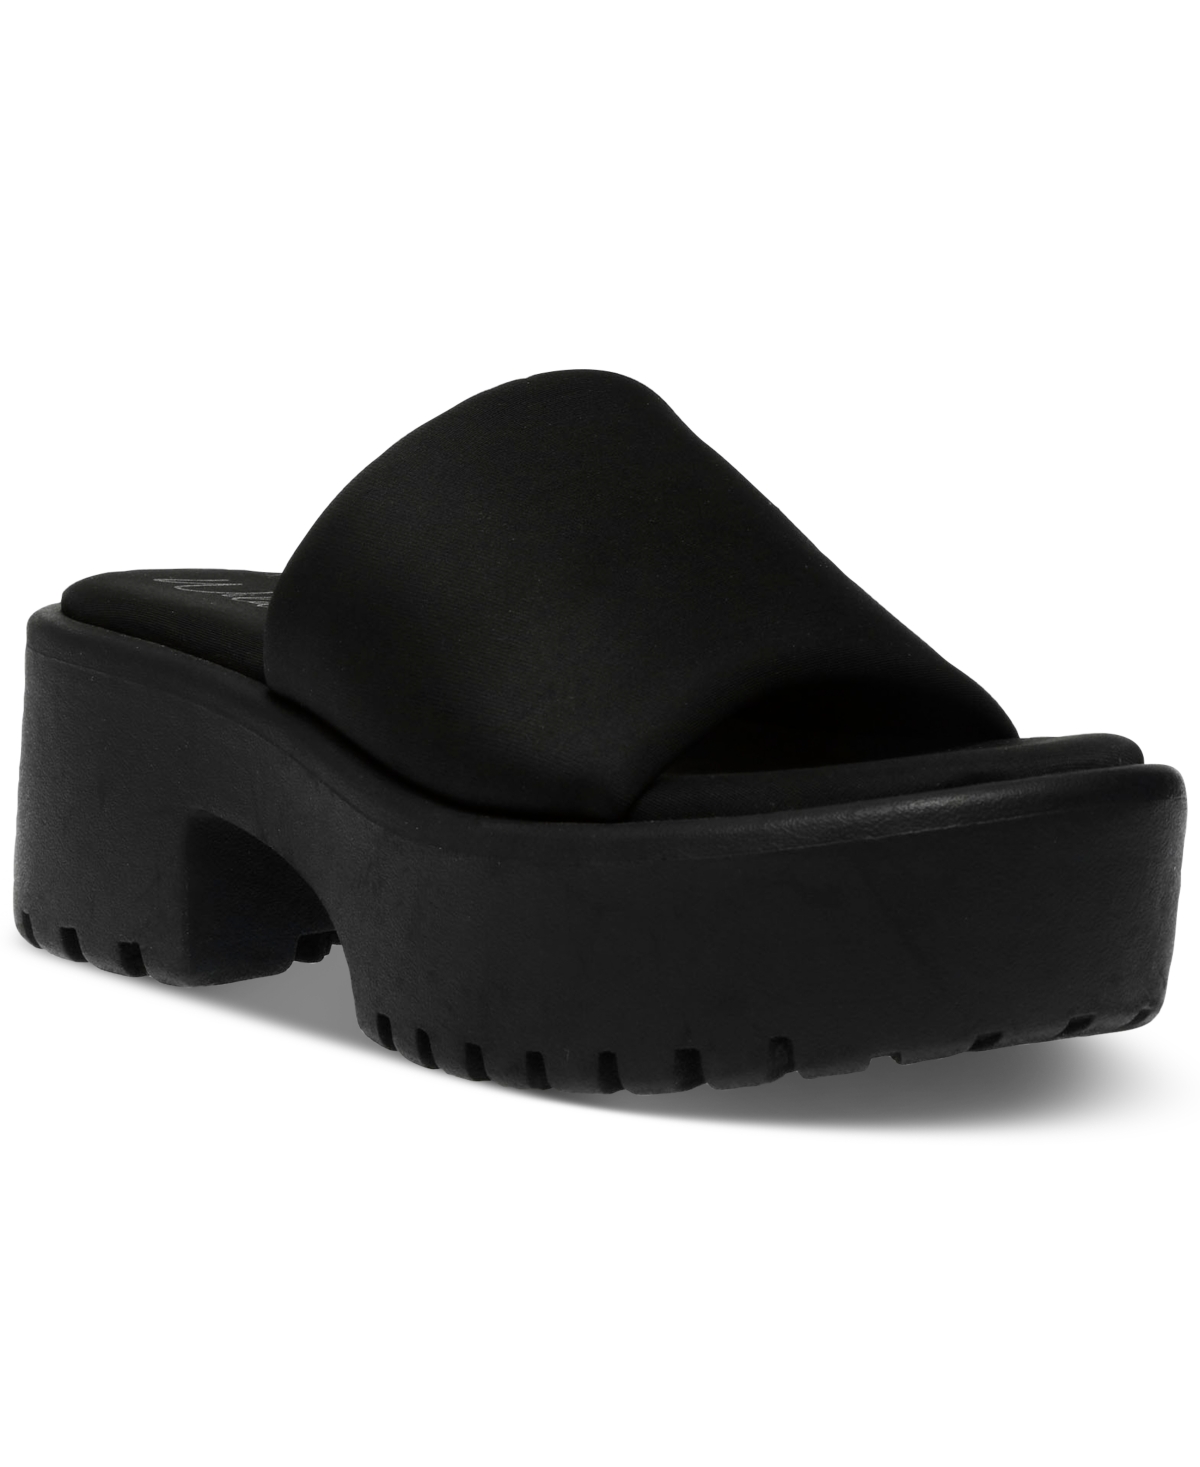 Questt Lug Slide Sandals, Created for Macy's - Black Fabric